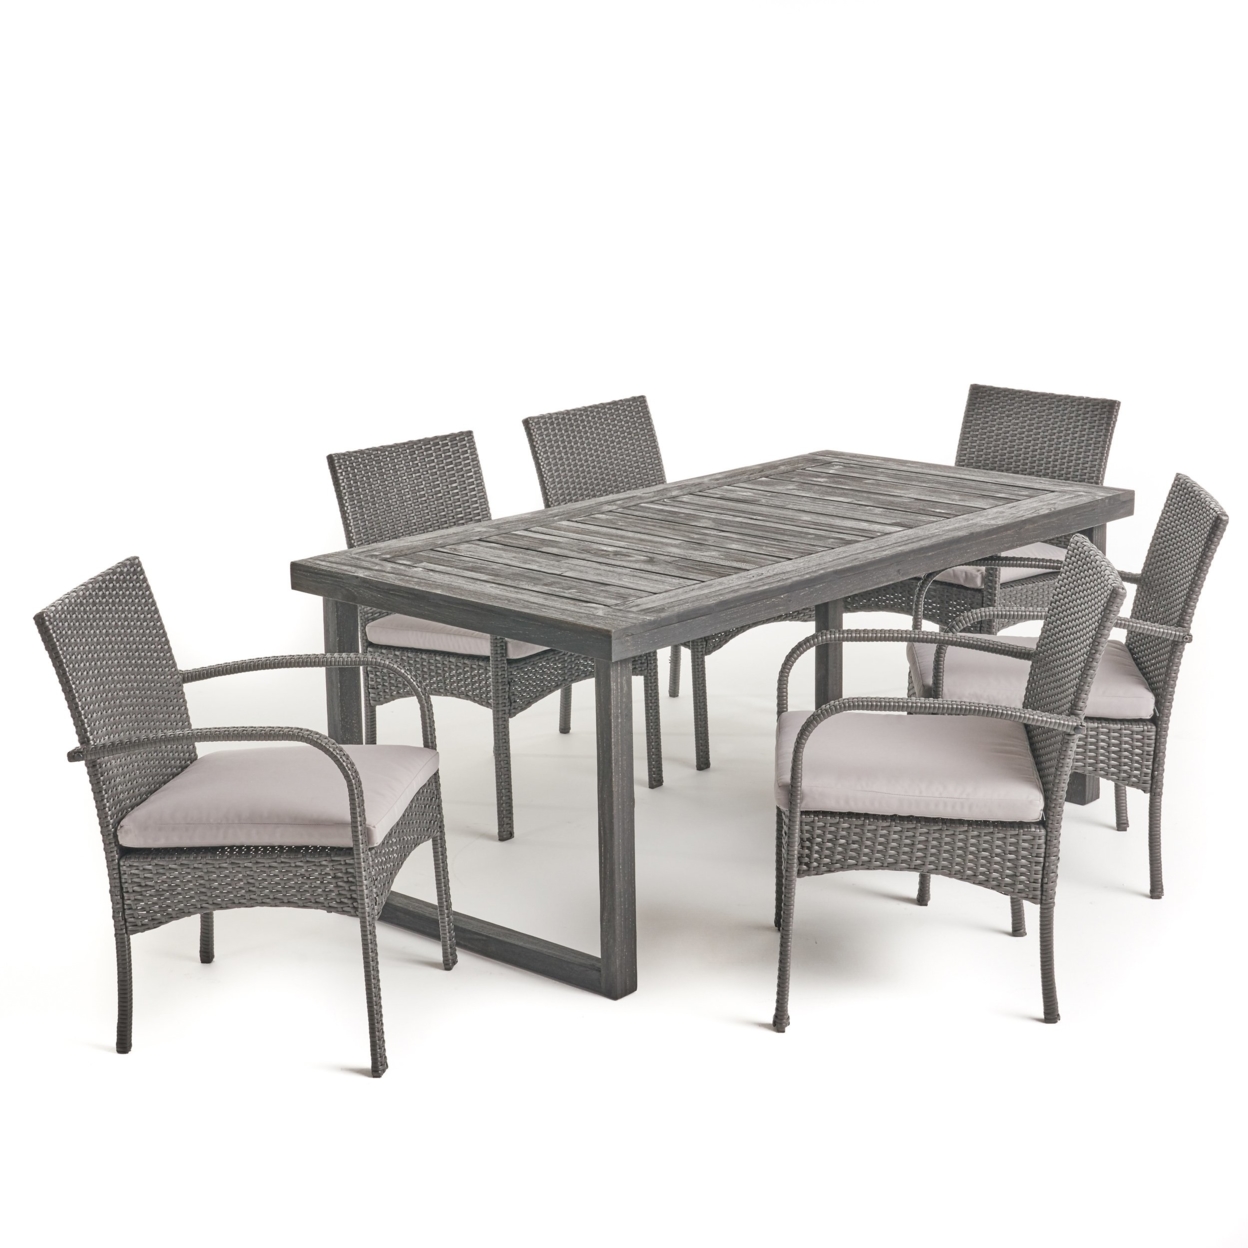 Doris Outdoor 6-Seater Acacia Wood Dining Set With Wicker Chairs, Sandblast Dark Gray Finish And Gray